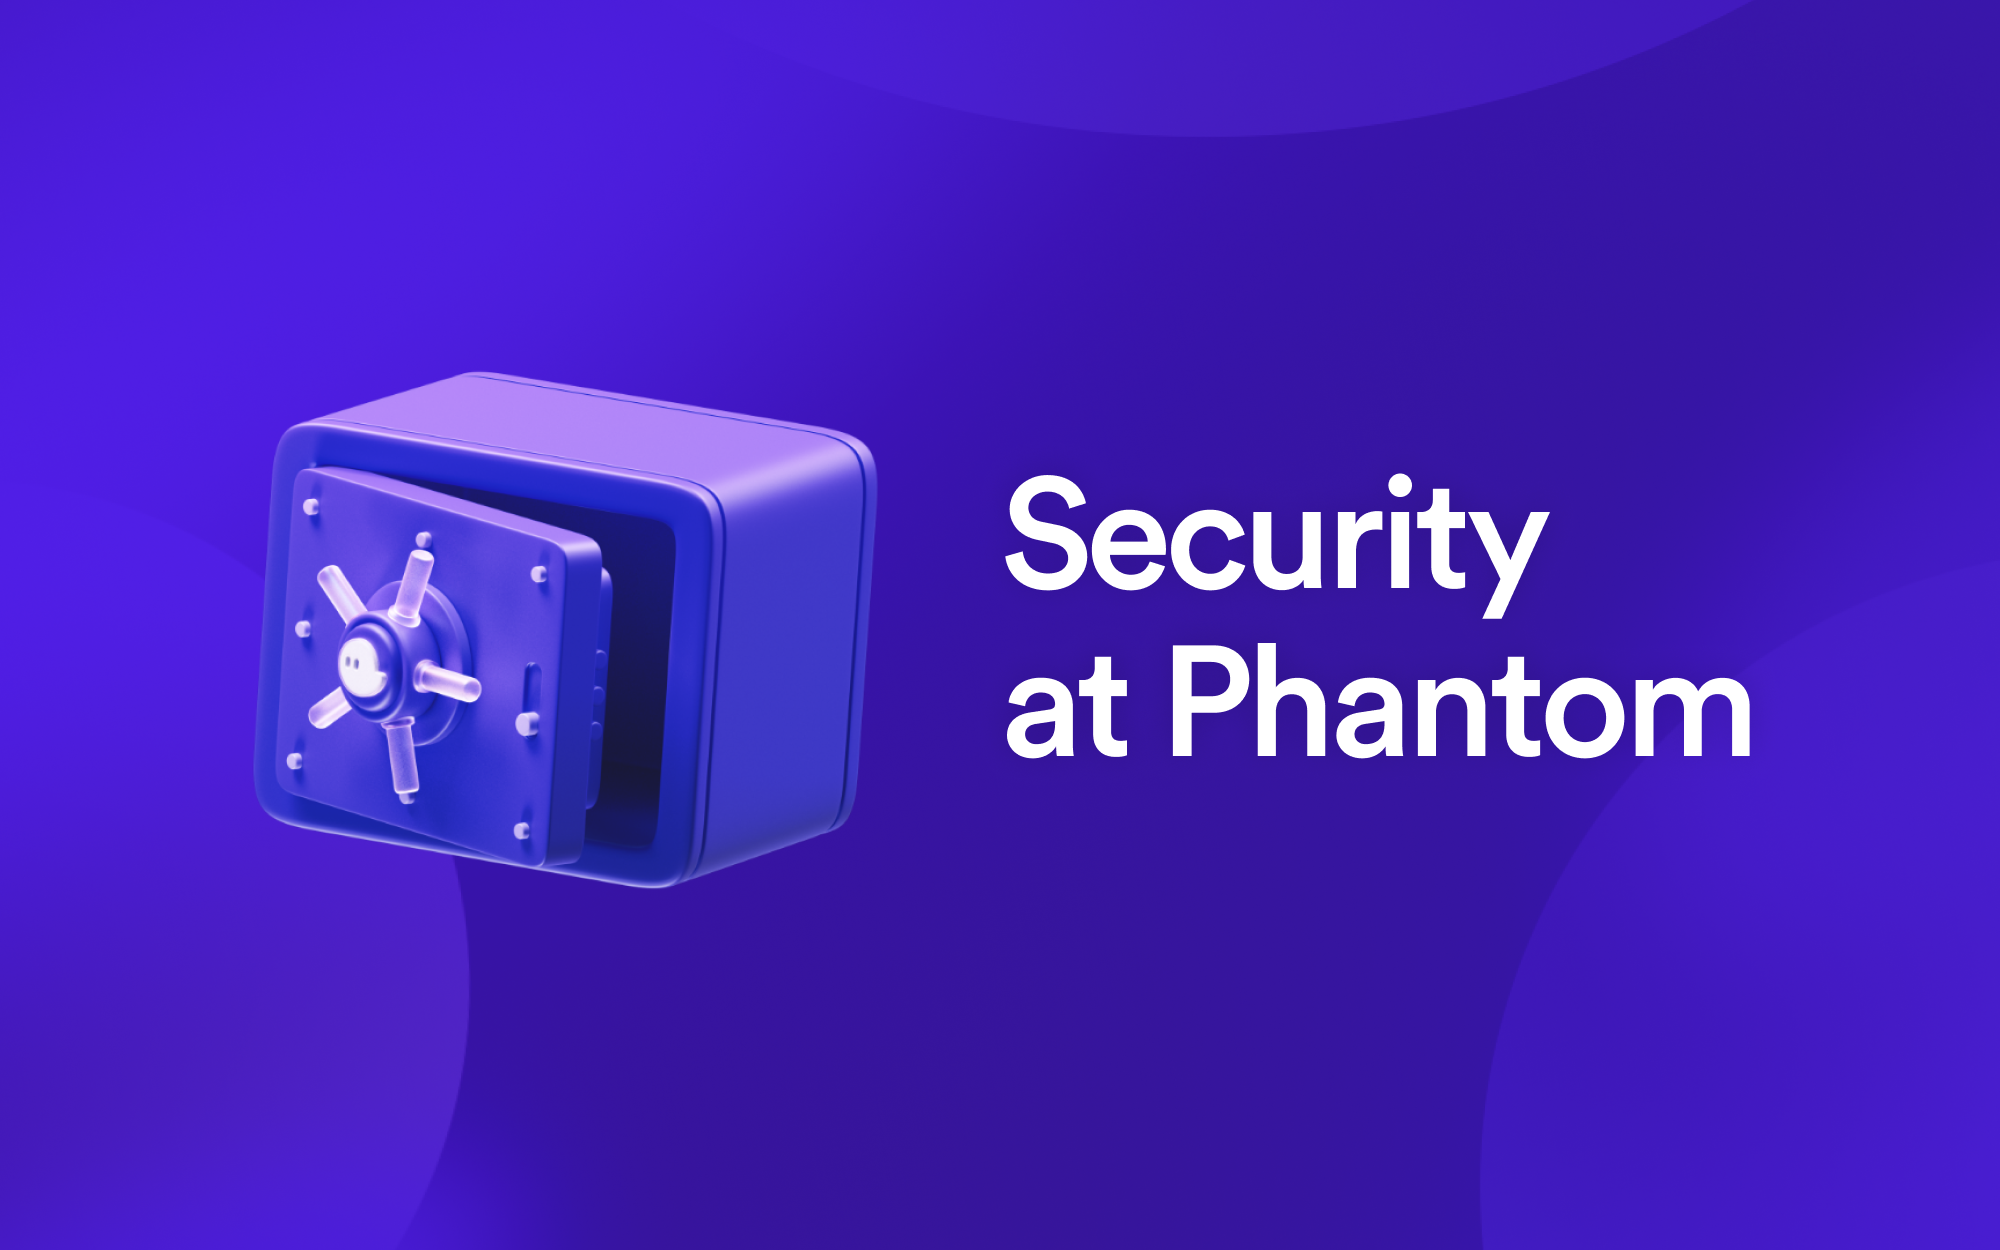 Security at Phantom